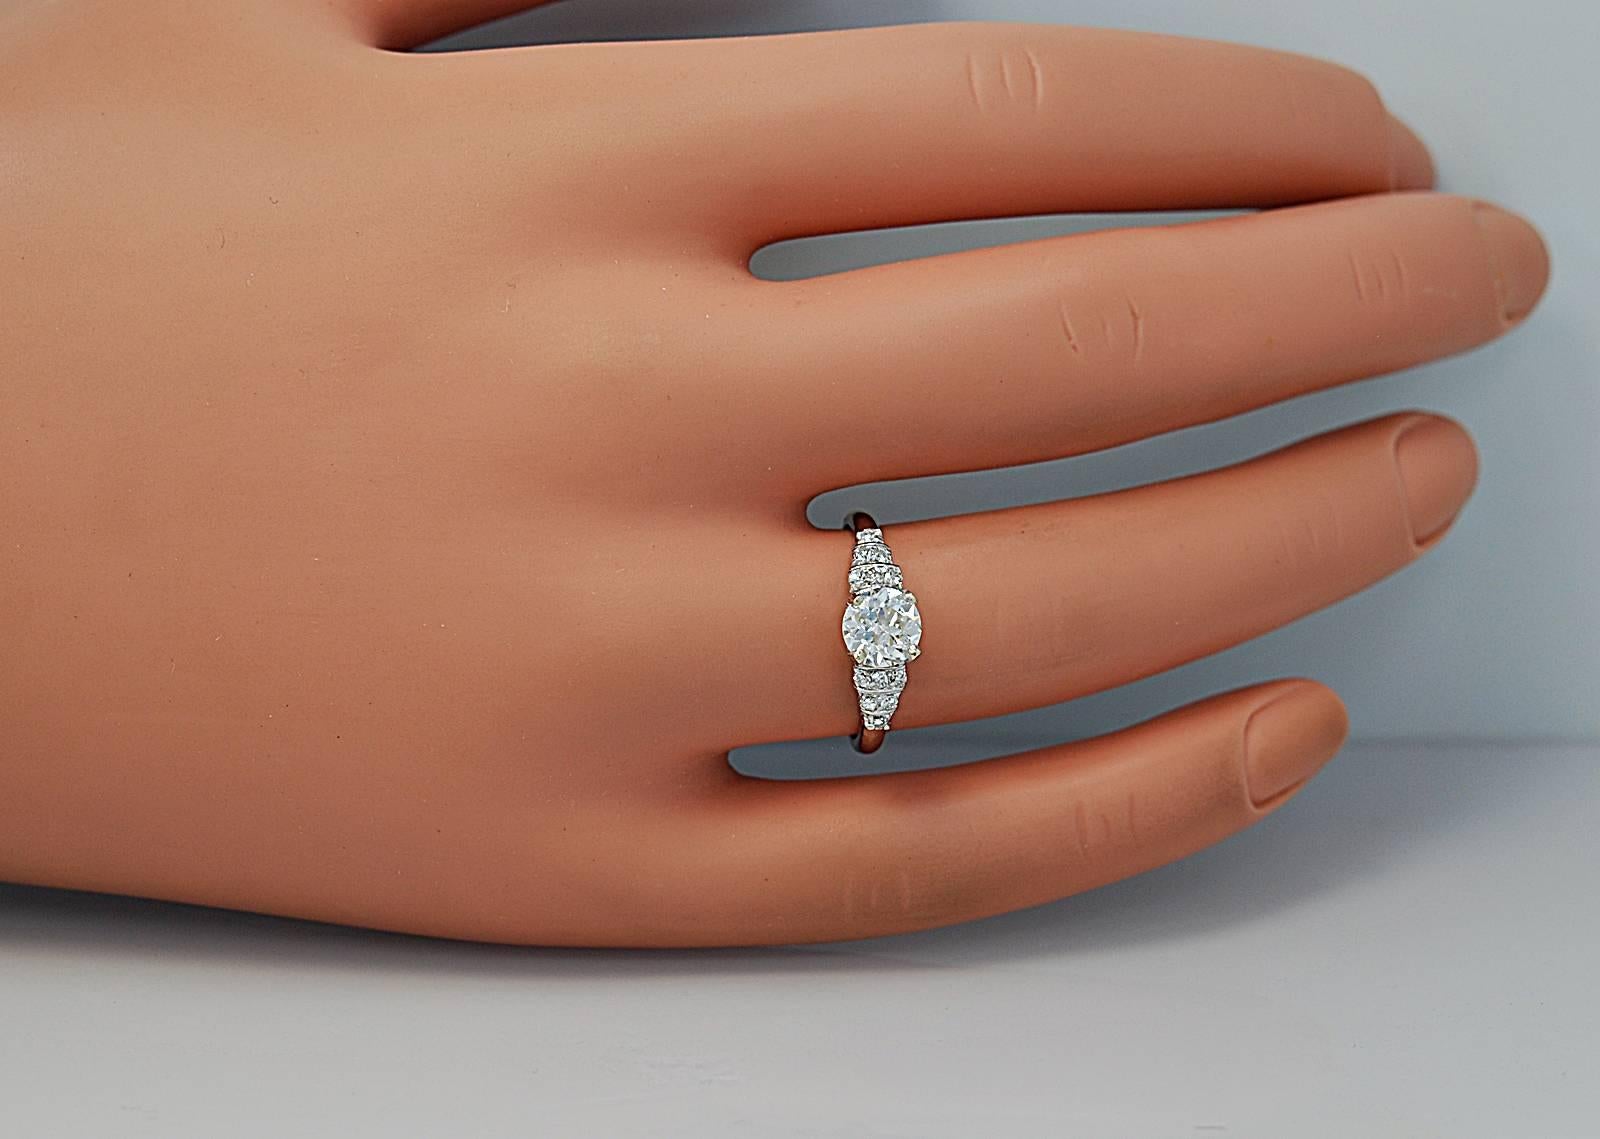 .96 carat diamond ring